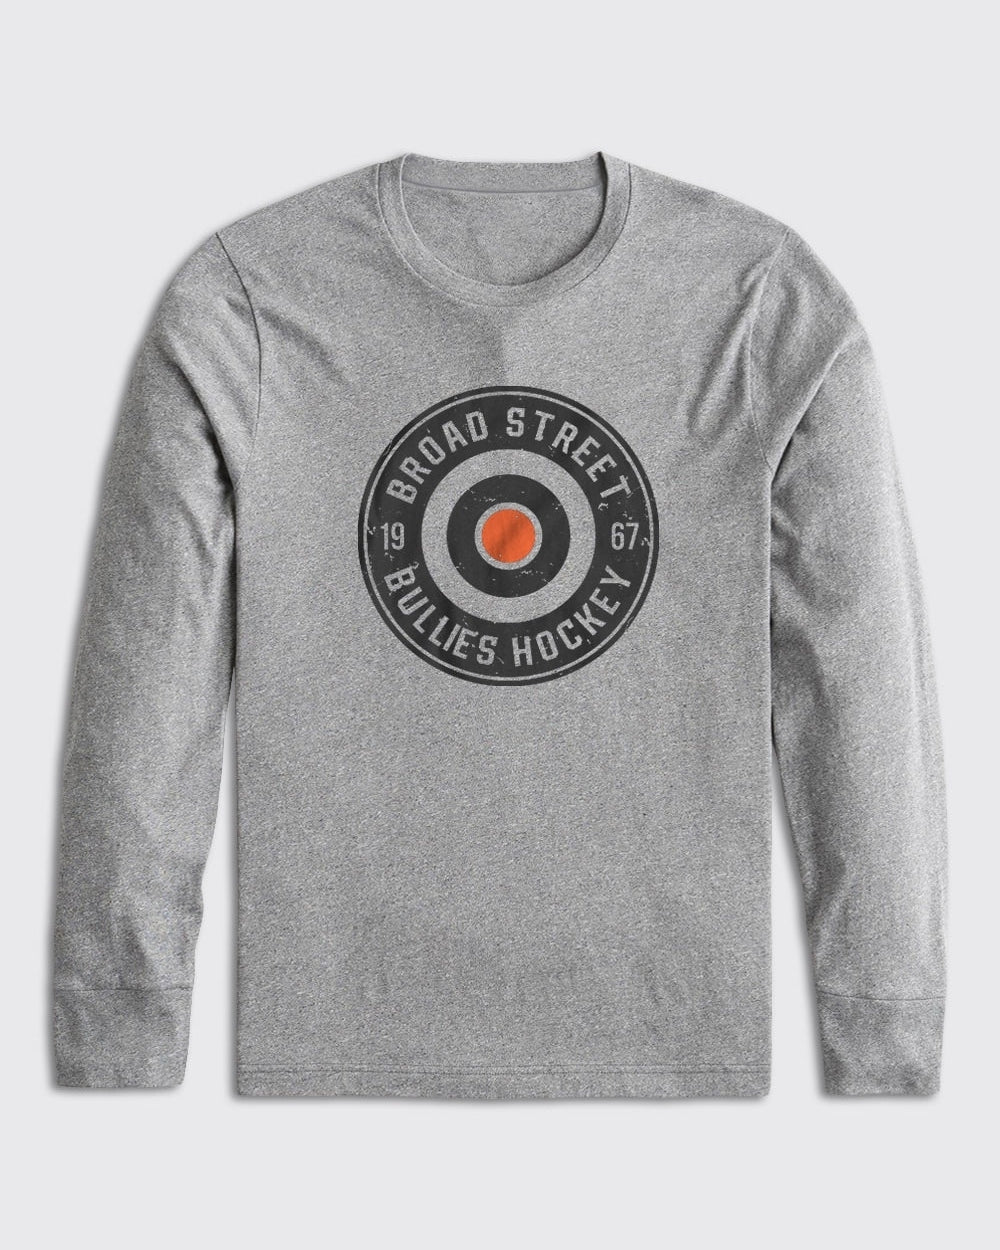 Broad Street Bullies Hockey Long Sleeve - Flyers, Long Sleeve - Philly Sports Shirts